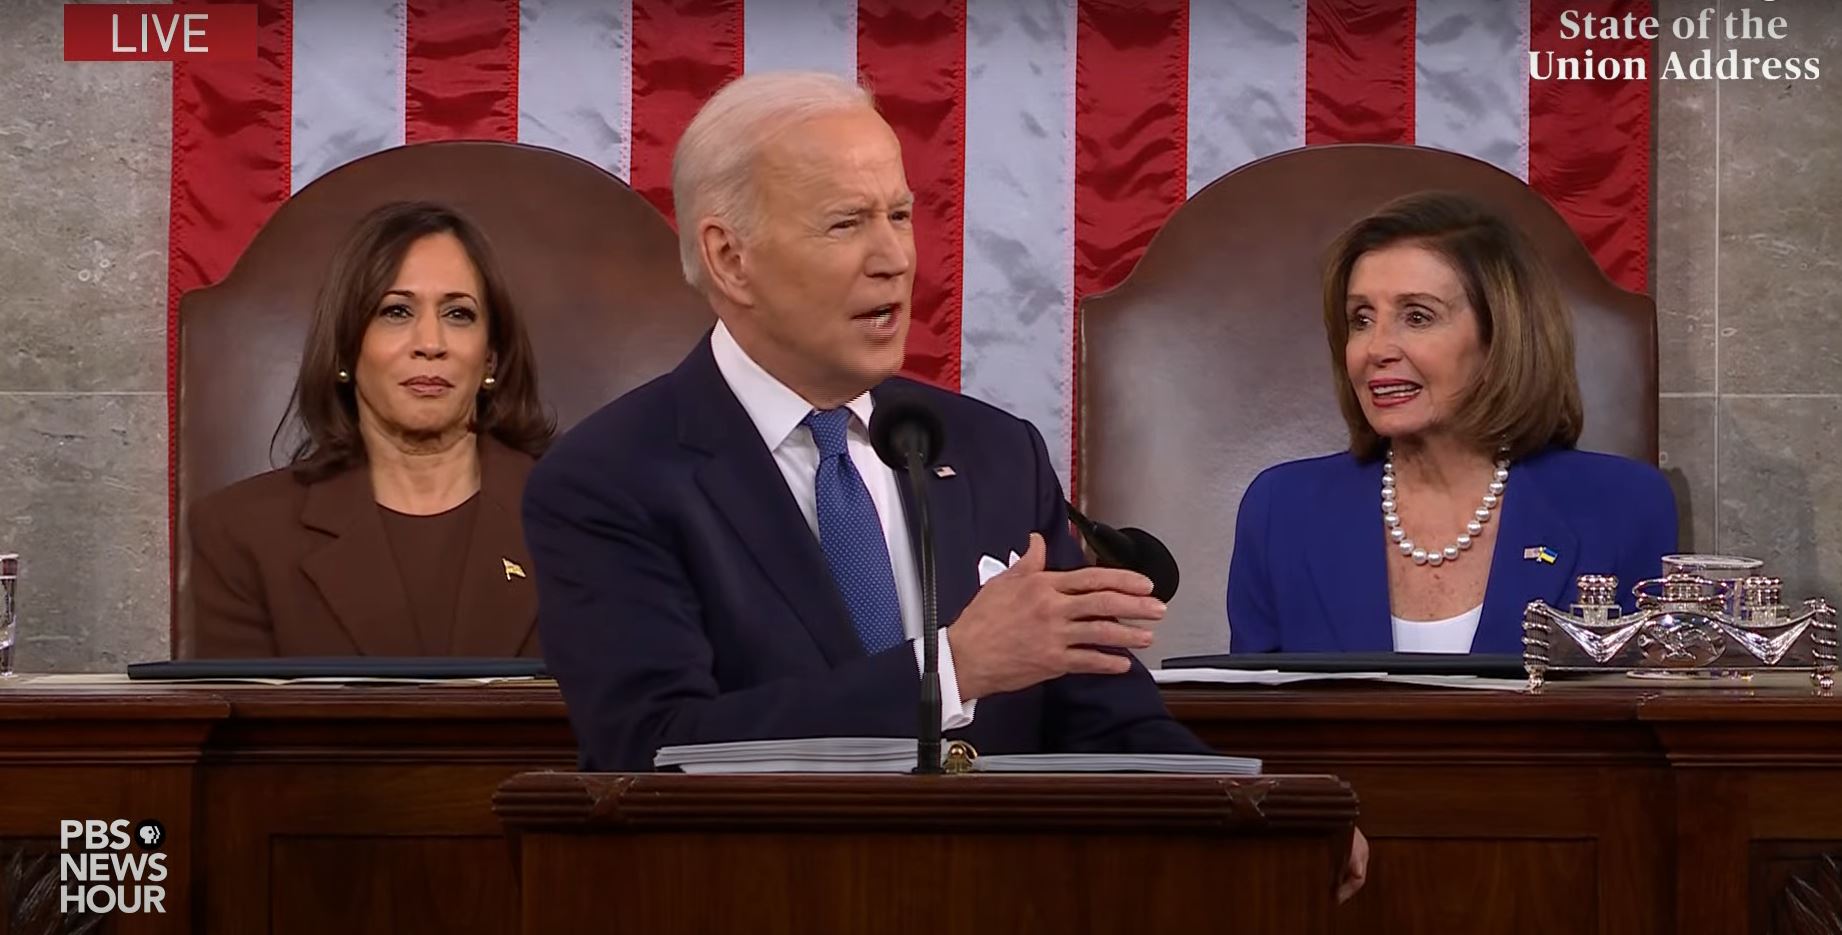 Joe Biden, Nancy Pelosi, and Kamala Harris